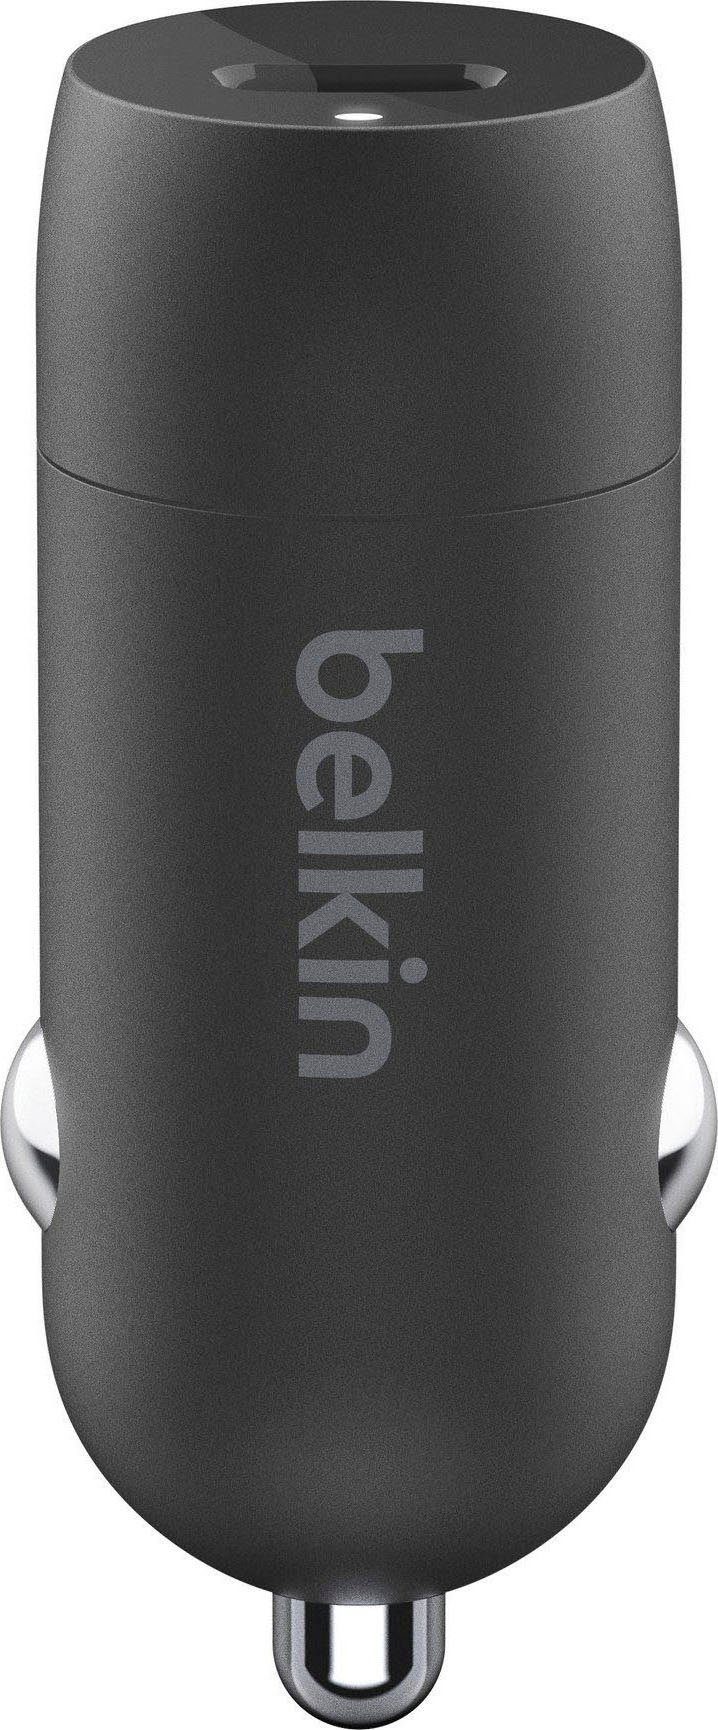 Belkin 20W USB-C Kfz-Ladegerät Delivery Autobatterie-Ladegerät mit Power